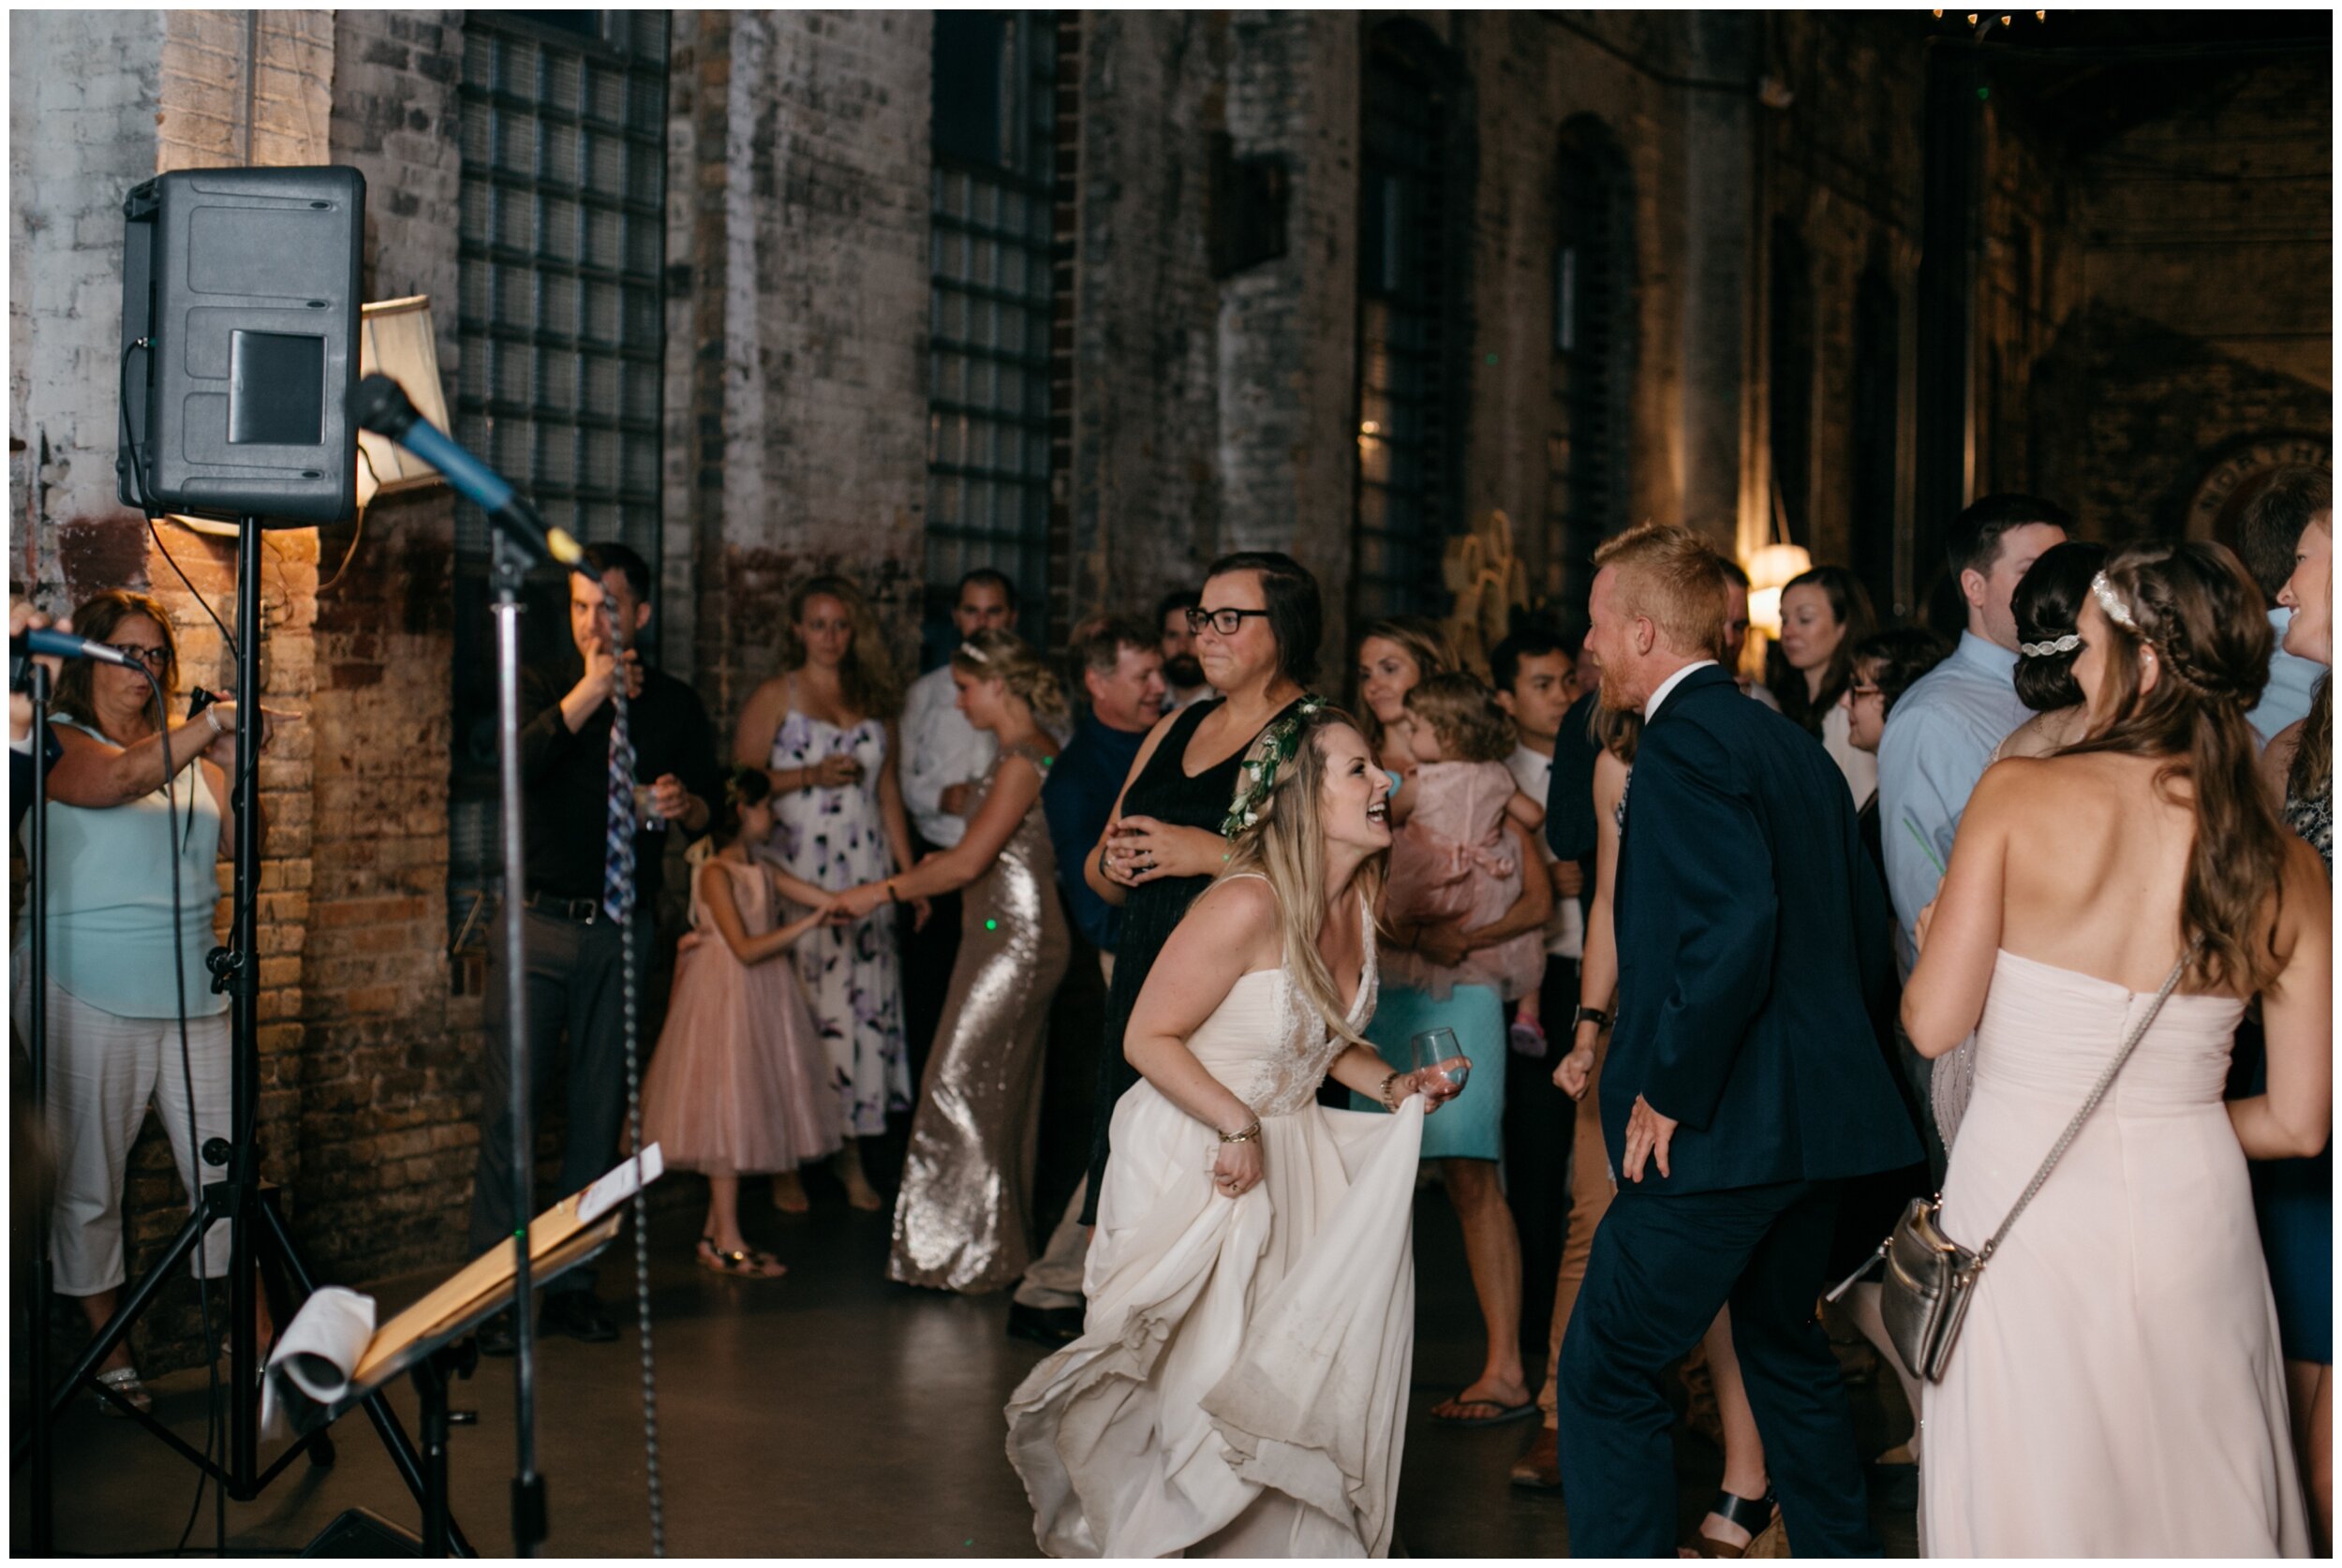 Bride dancing with wedding guests in industrial warehouse wedding